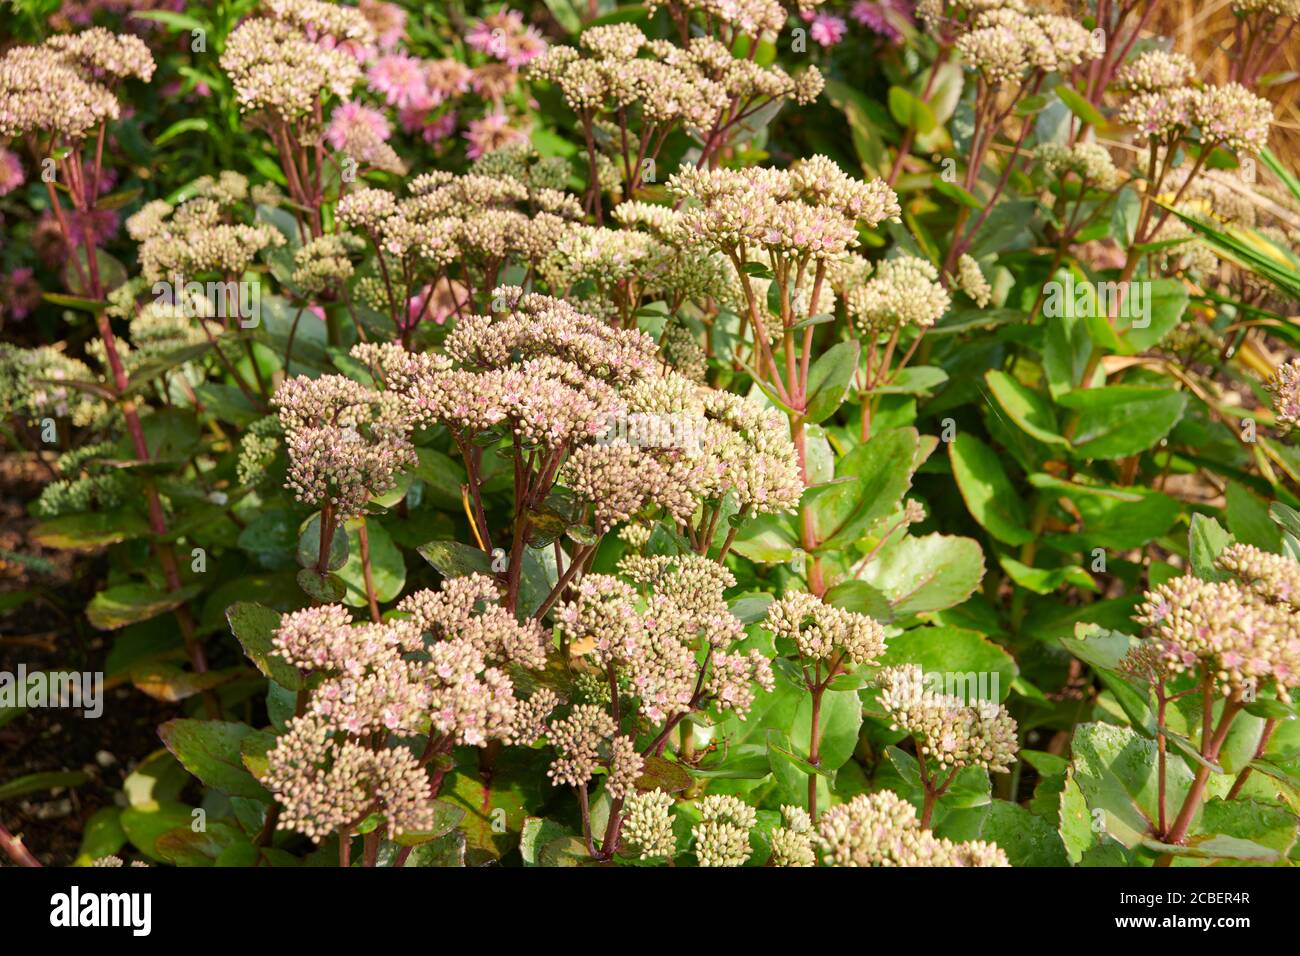 Iceplant (Hylotelephium spectabile) also known as Butterfly stonecrop, Autumn joy, Sedum. Stock Photo